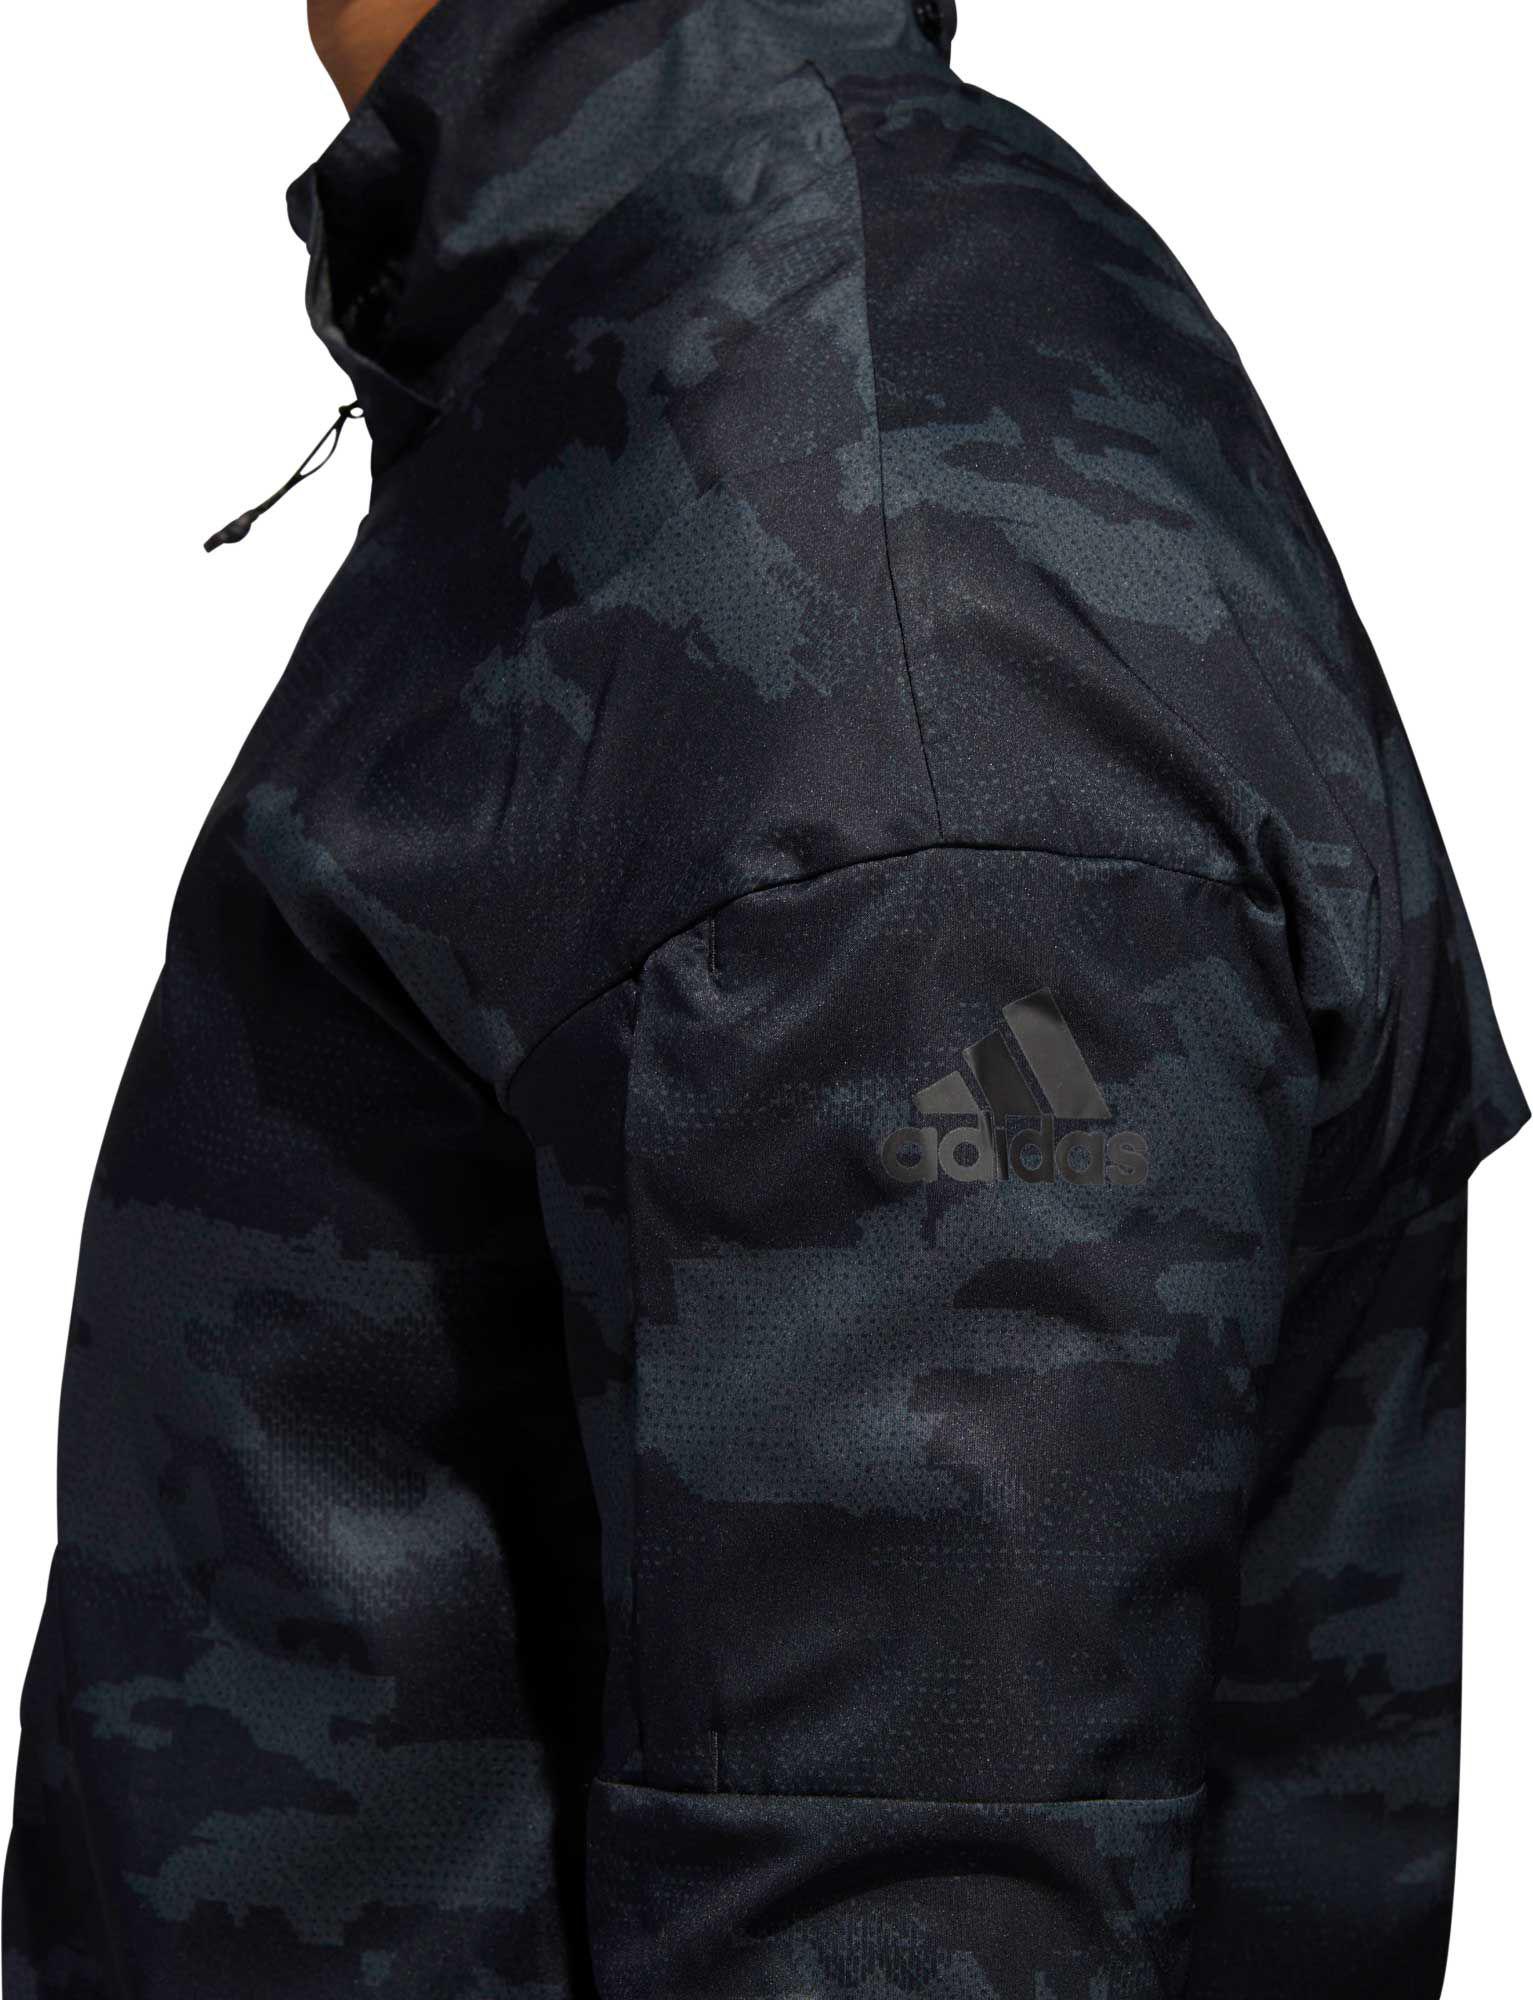 adidas Synthetic Supernova Tko Dpr Jacket in Black for Men - Lyst